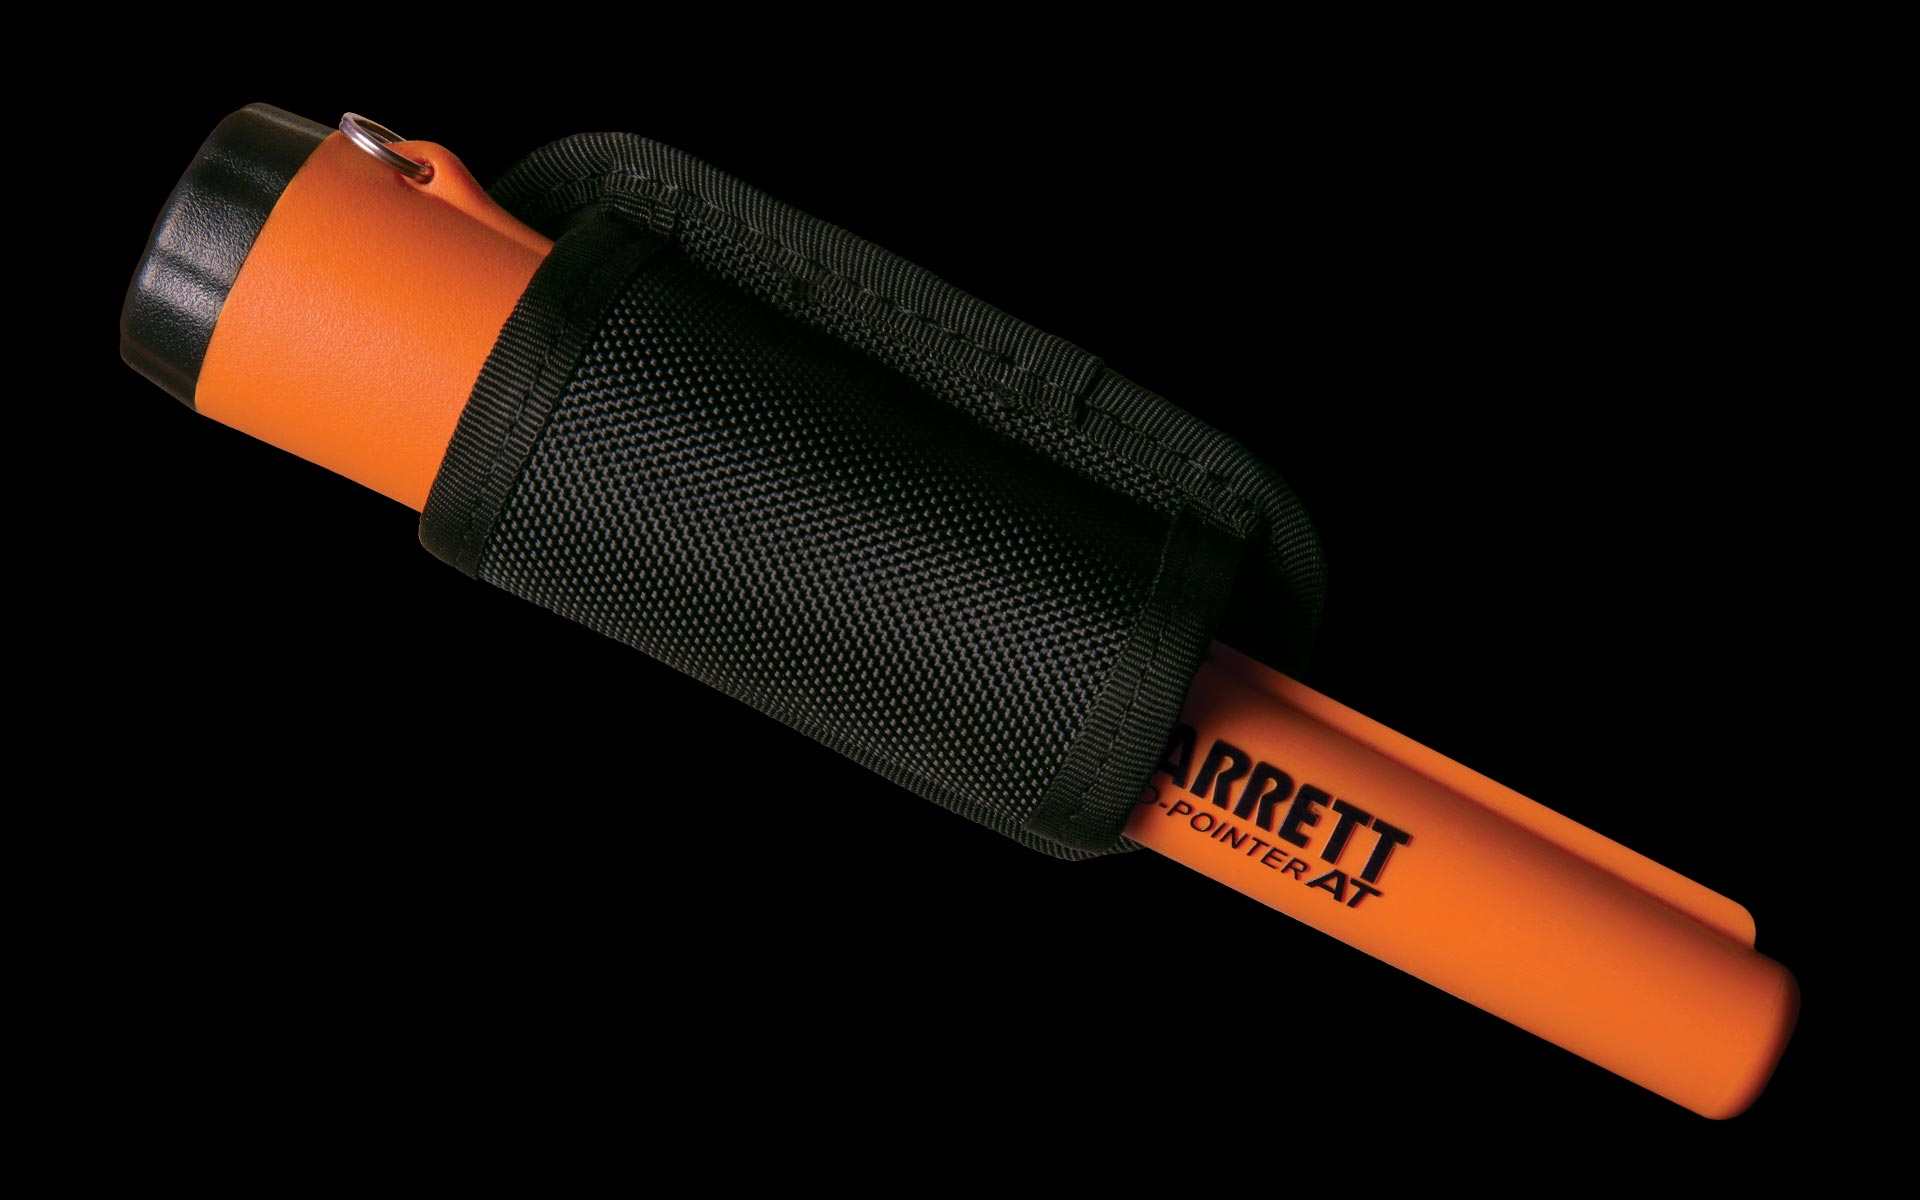 Garrett Pro-Pointer AT Waterproof Pinpointer – Backwoods Metal Detectors